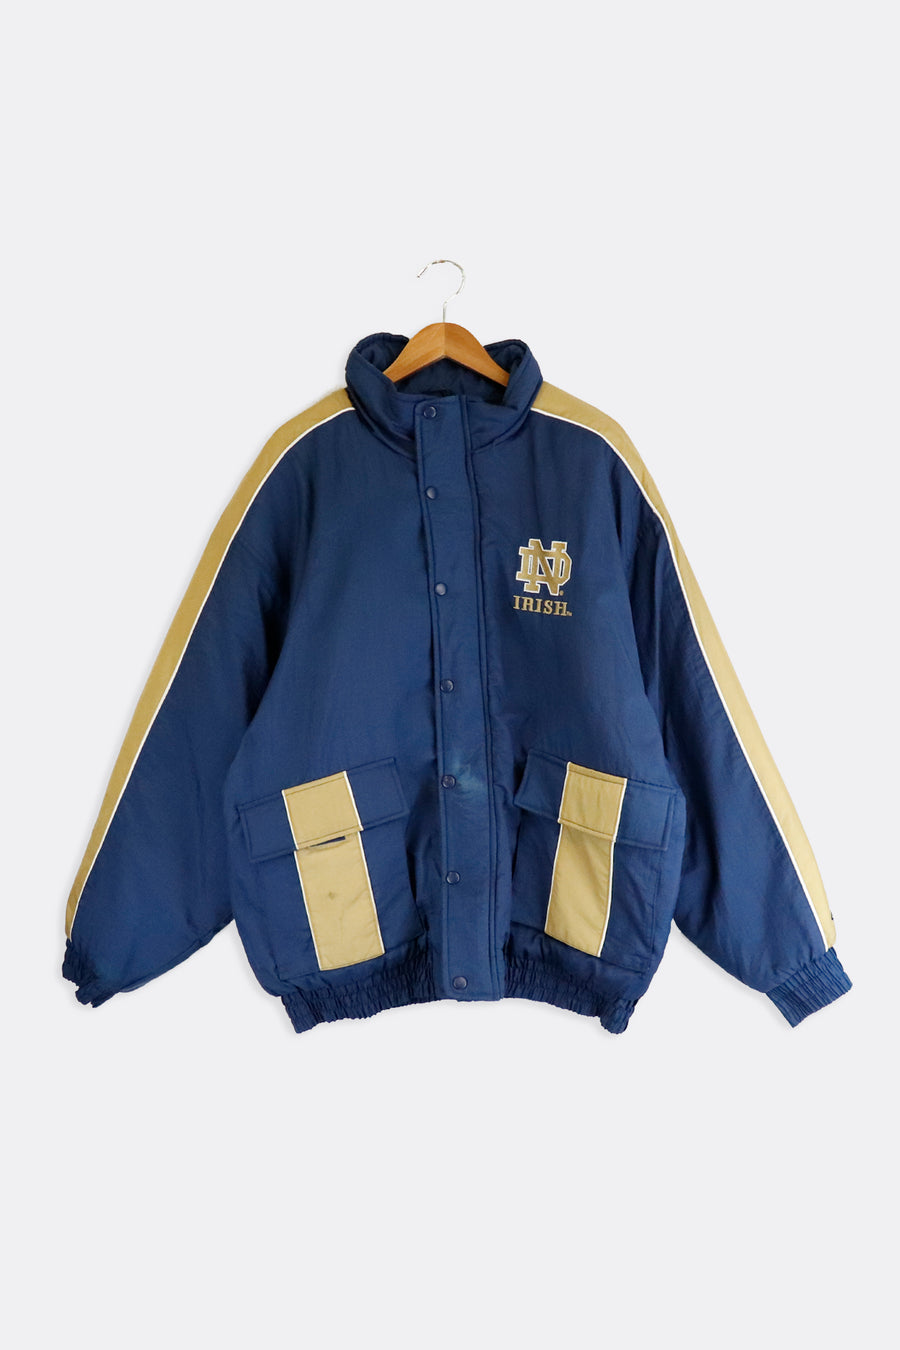 Vintage Notre Dame Fighting Irish Button Up Winter Jacket Sz XL